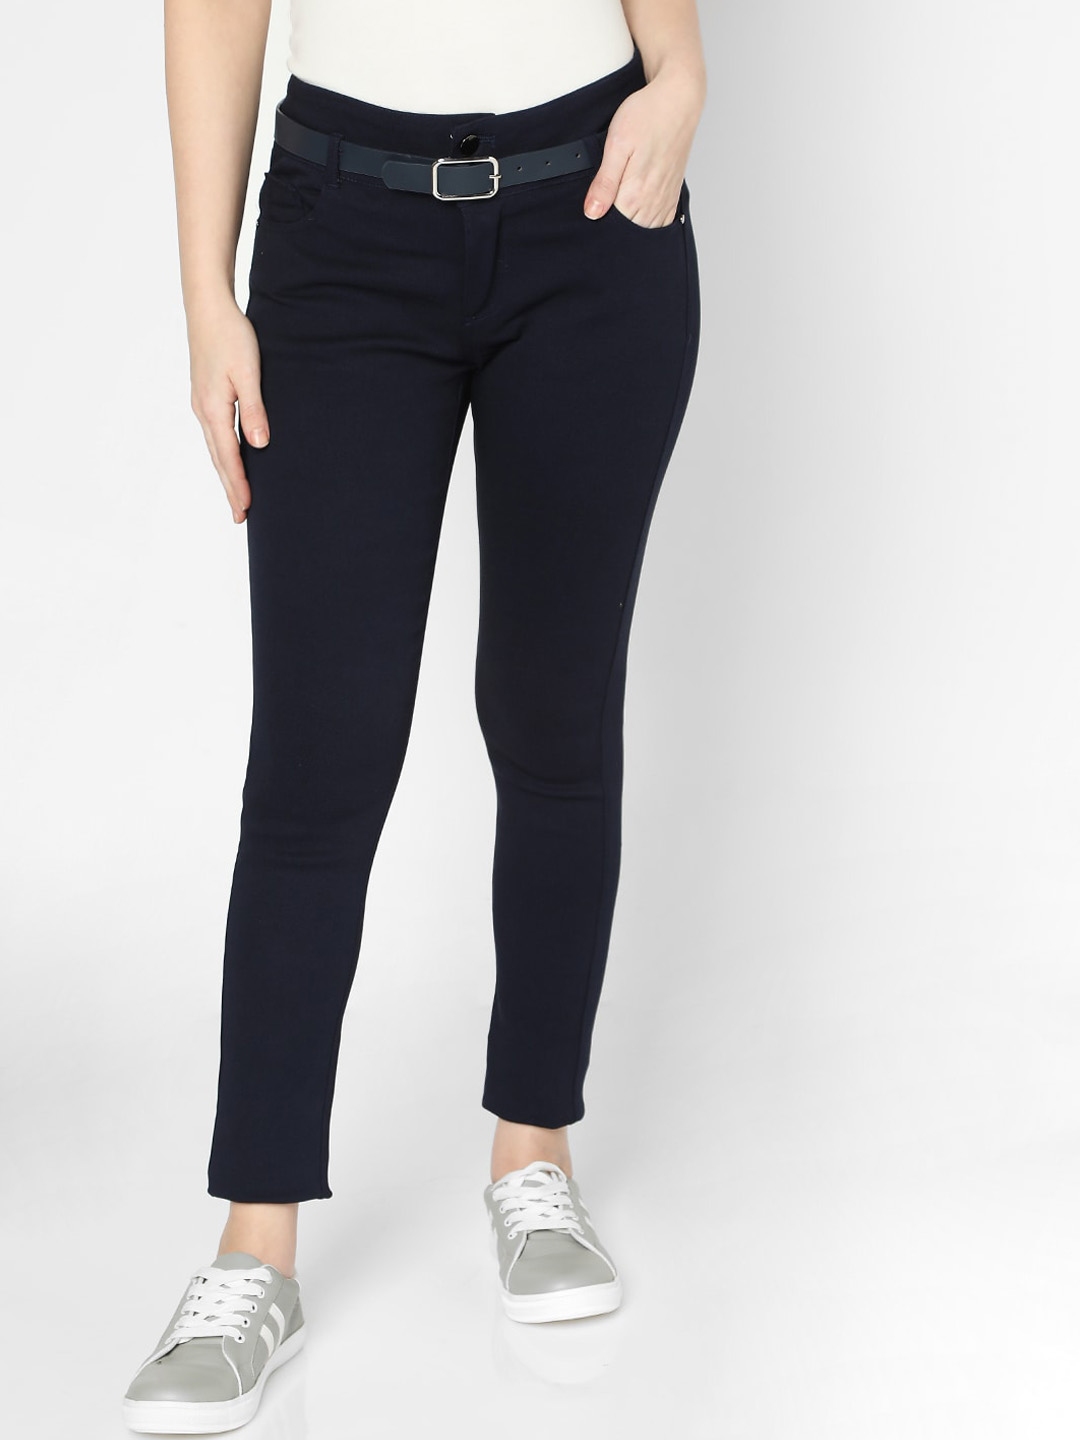 Buy Deal Jeans Women Navy Blue Slim Fit Solid Regular Trousers ...